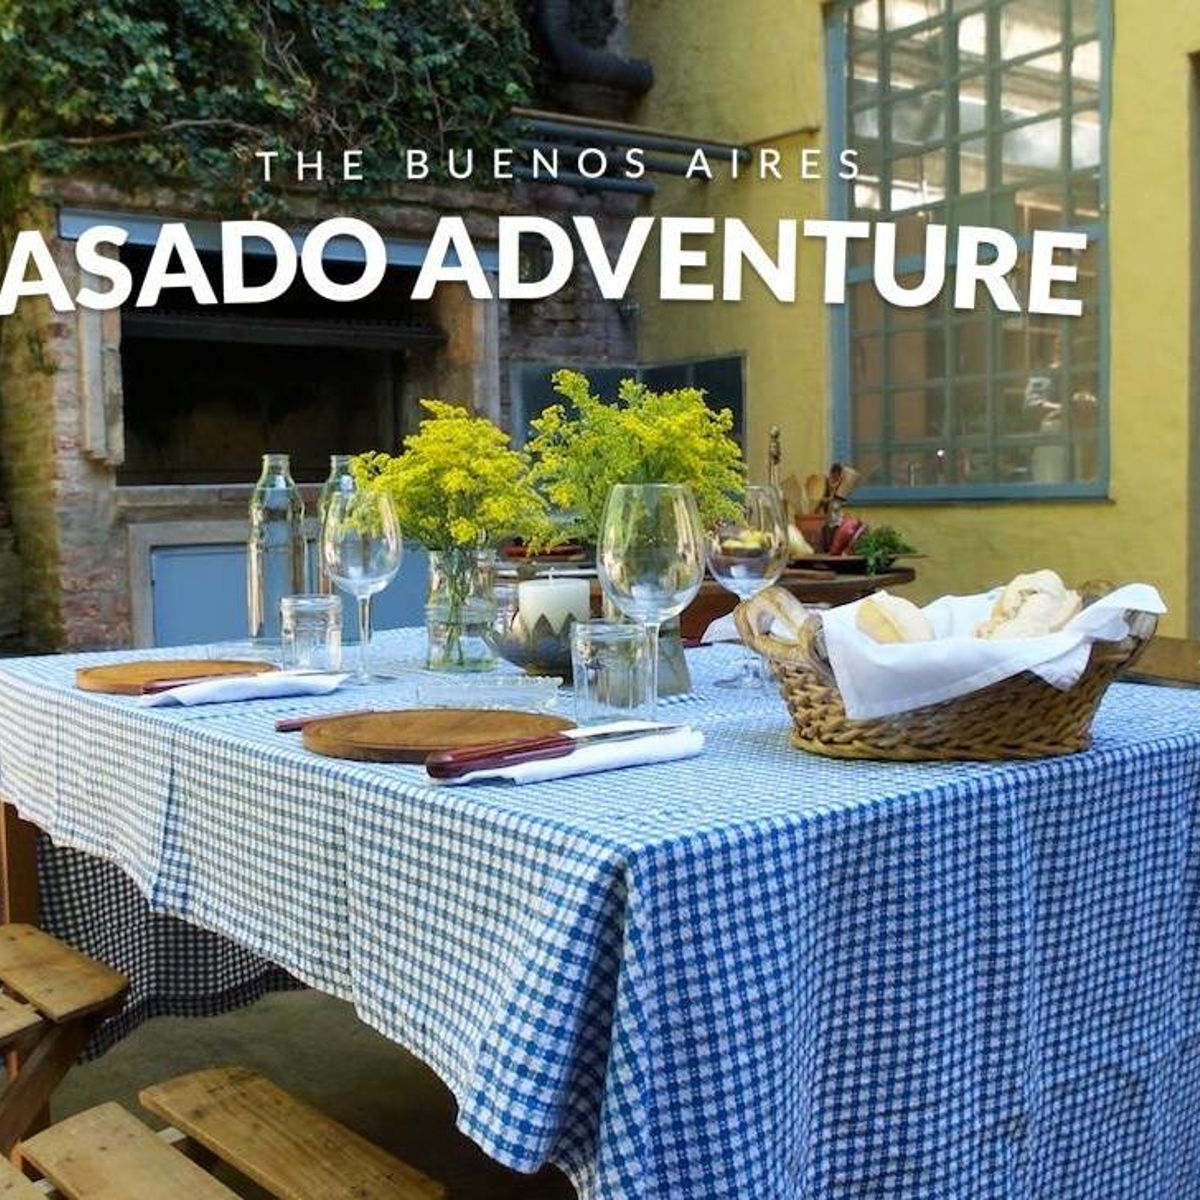 The Buenos Aires Asado adventure